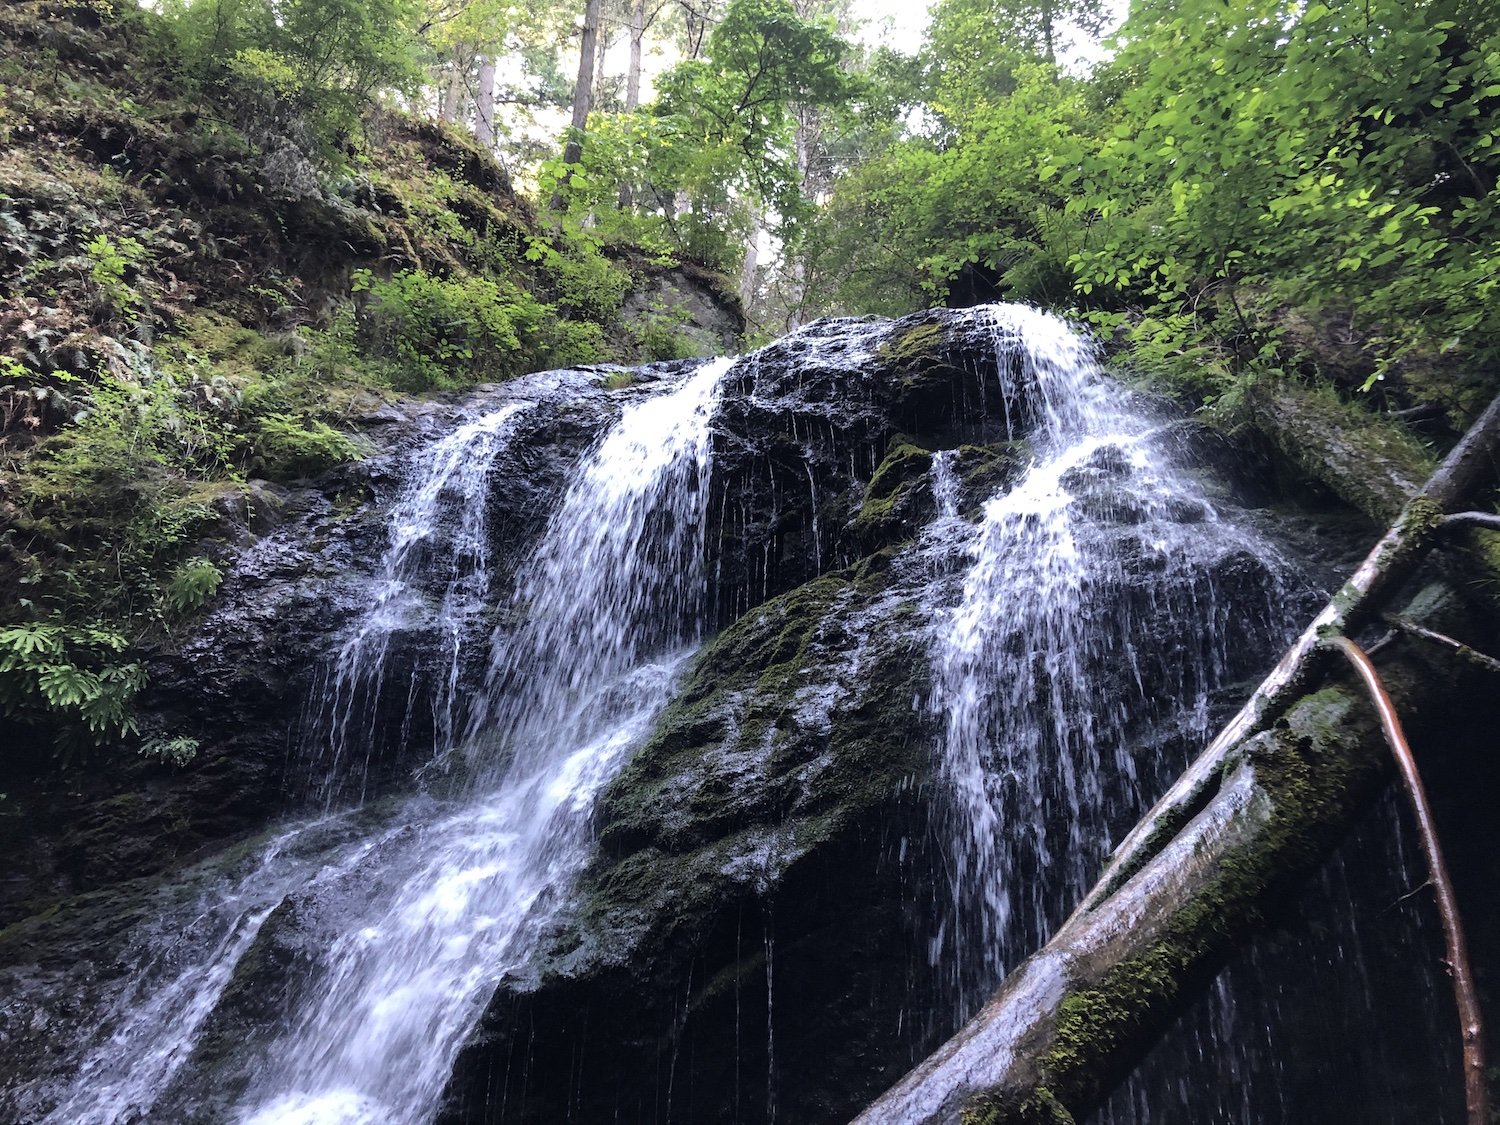 Waterfall over mossy rocks